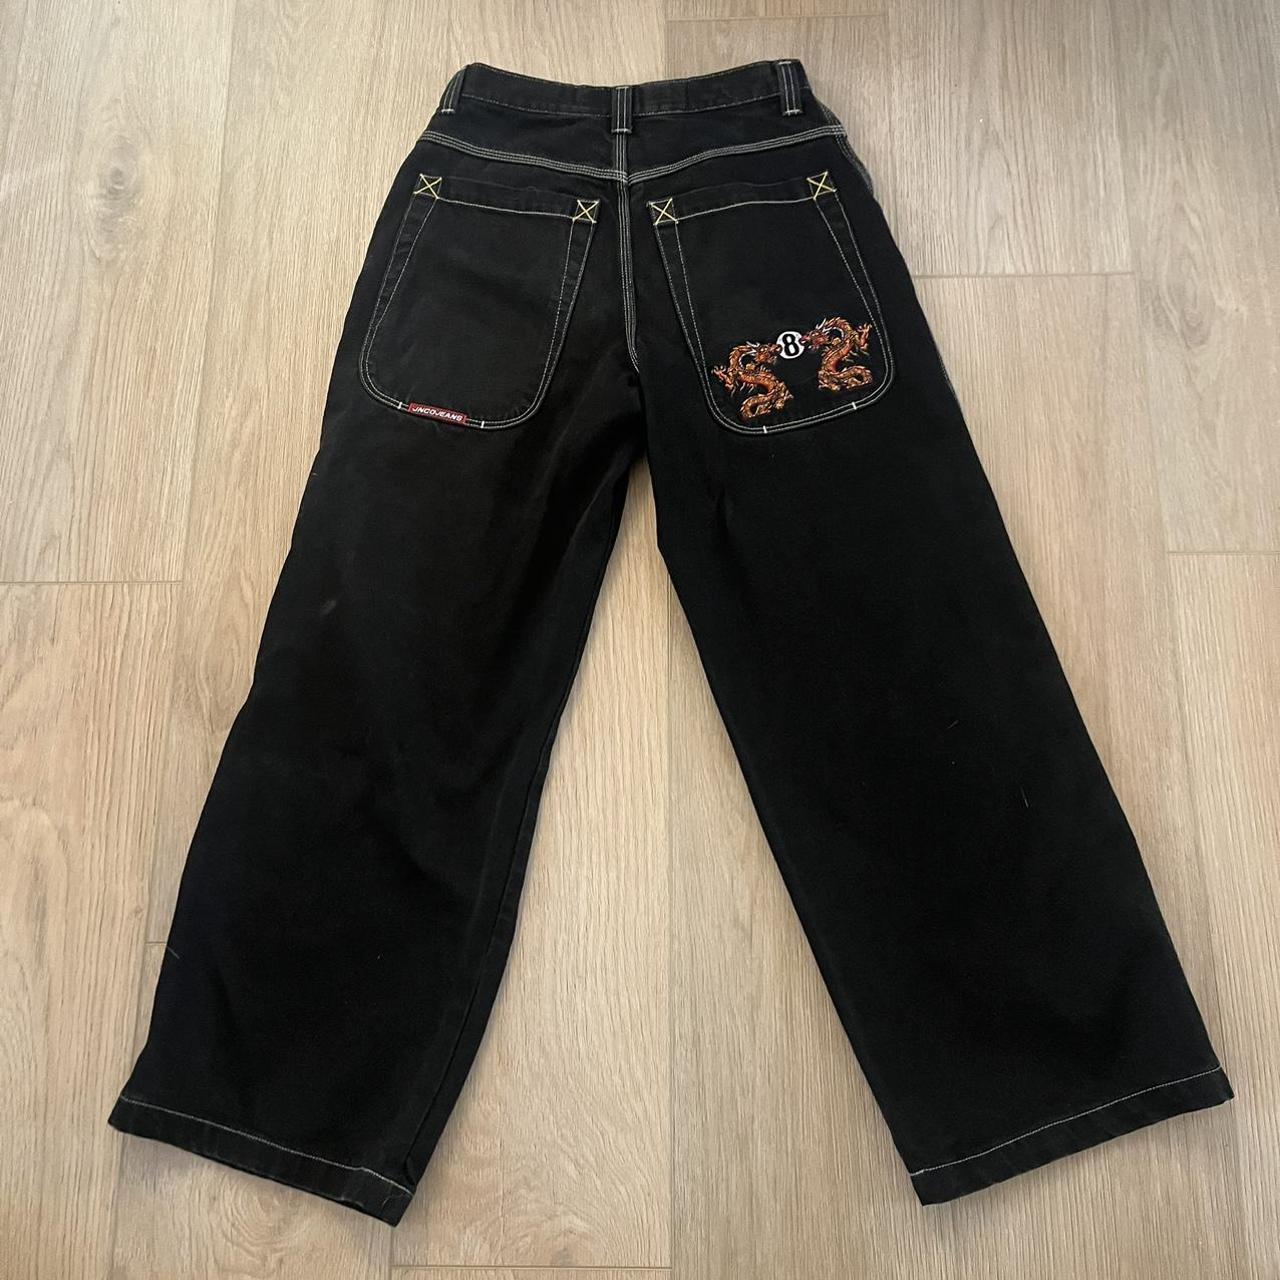 Vintage jnco dragón 8 ball jeans. Size 31x30 I... - Depop